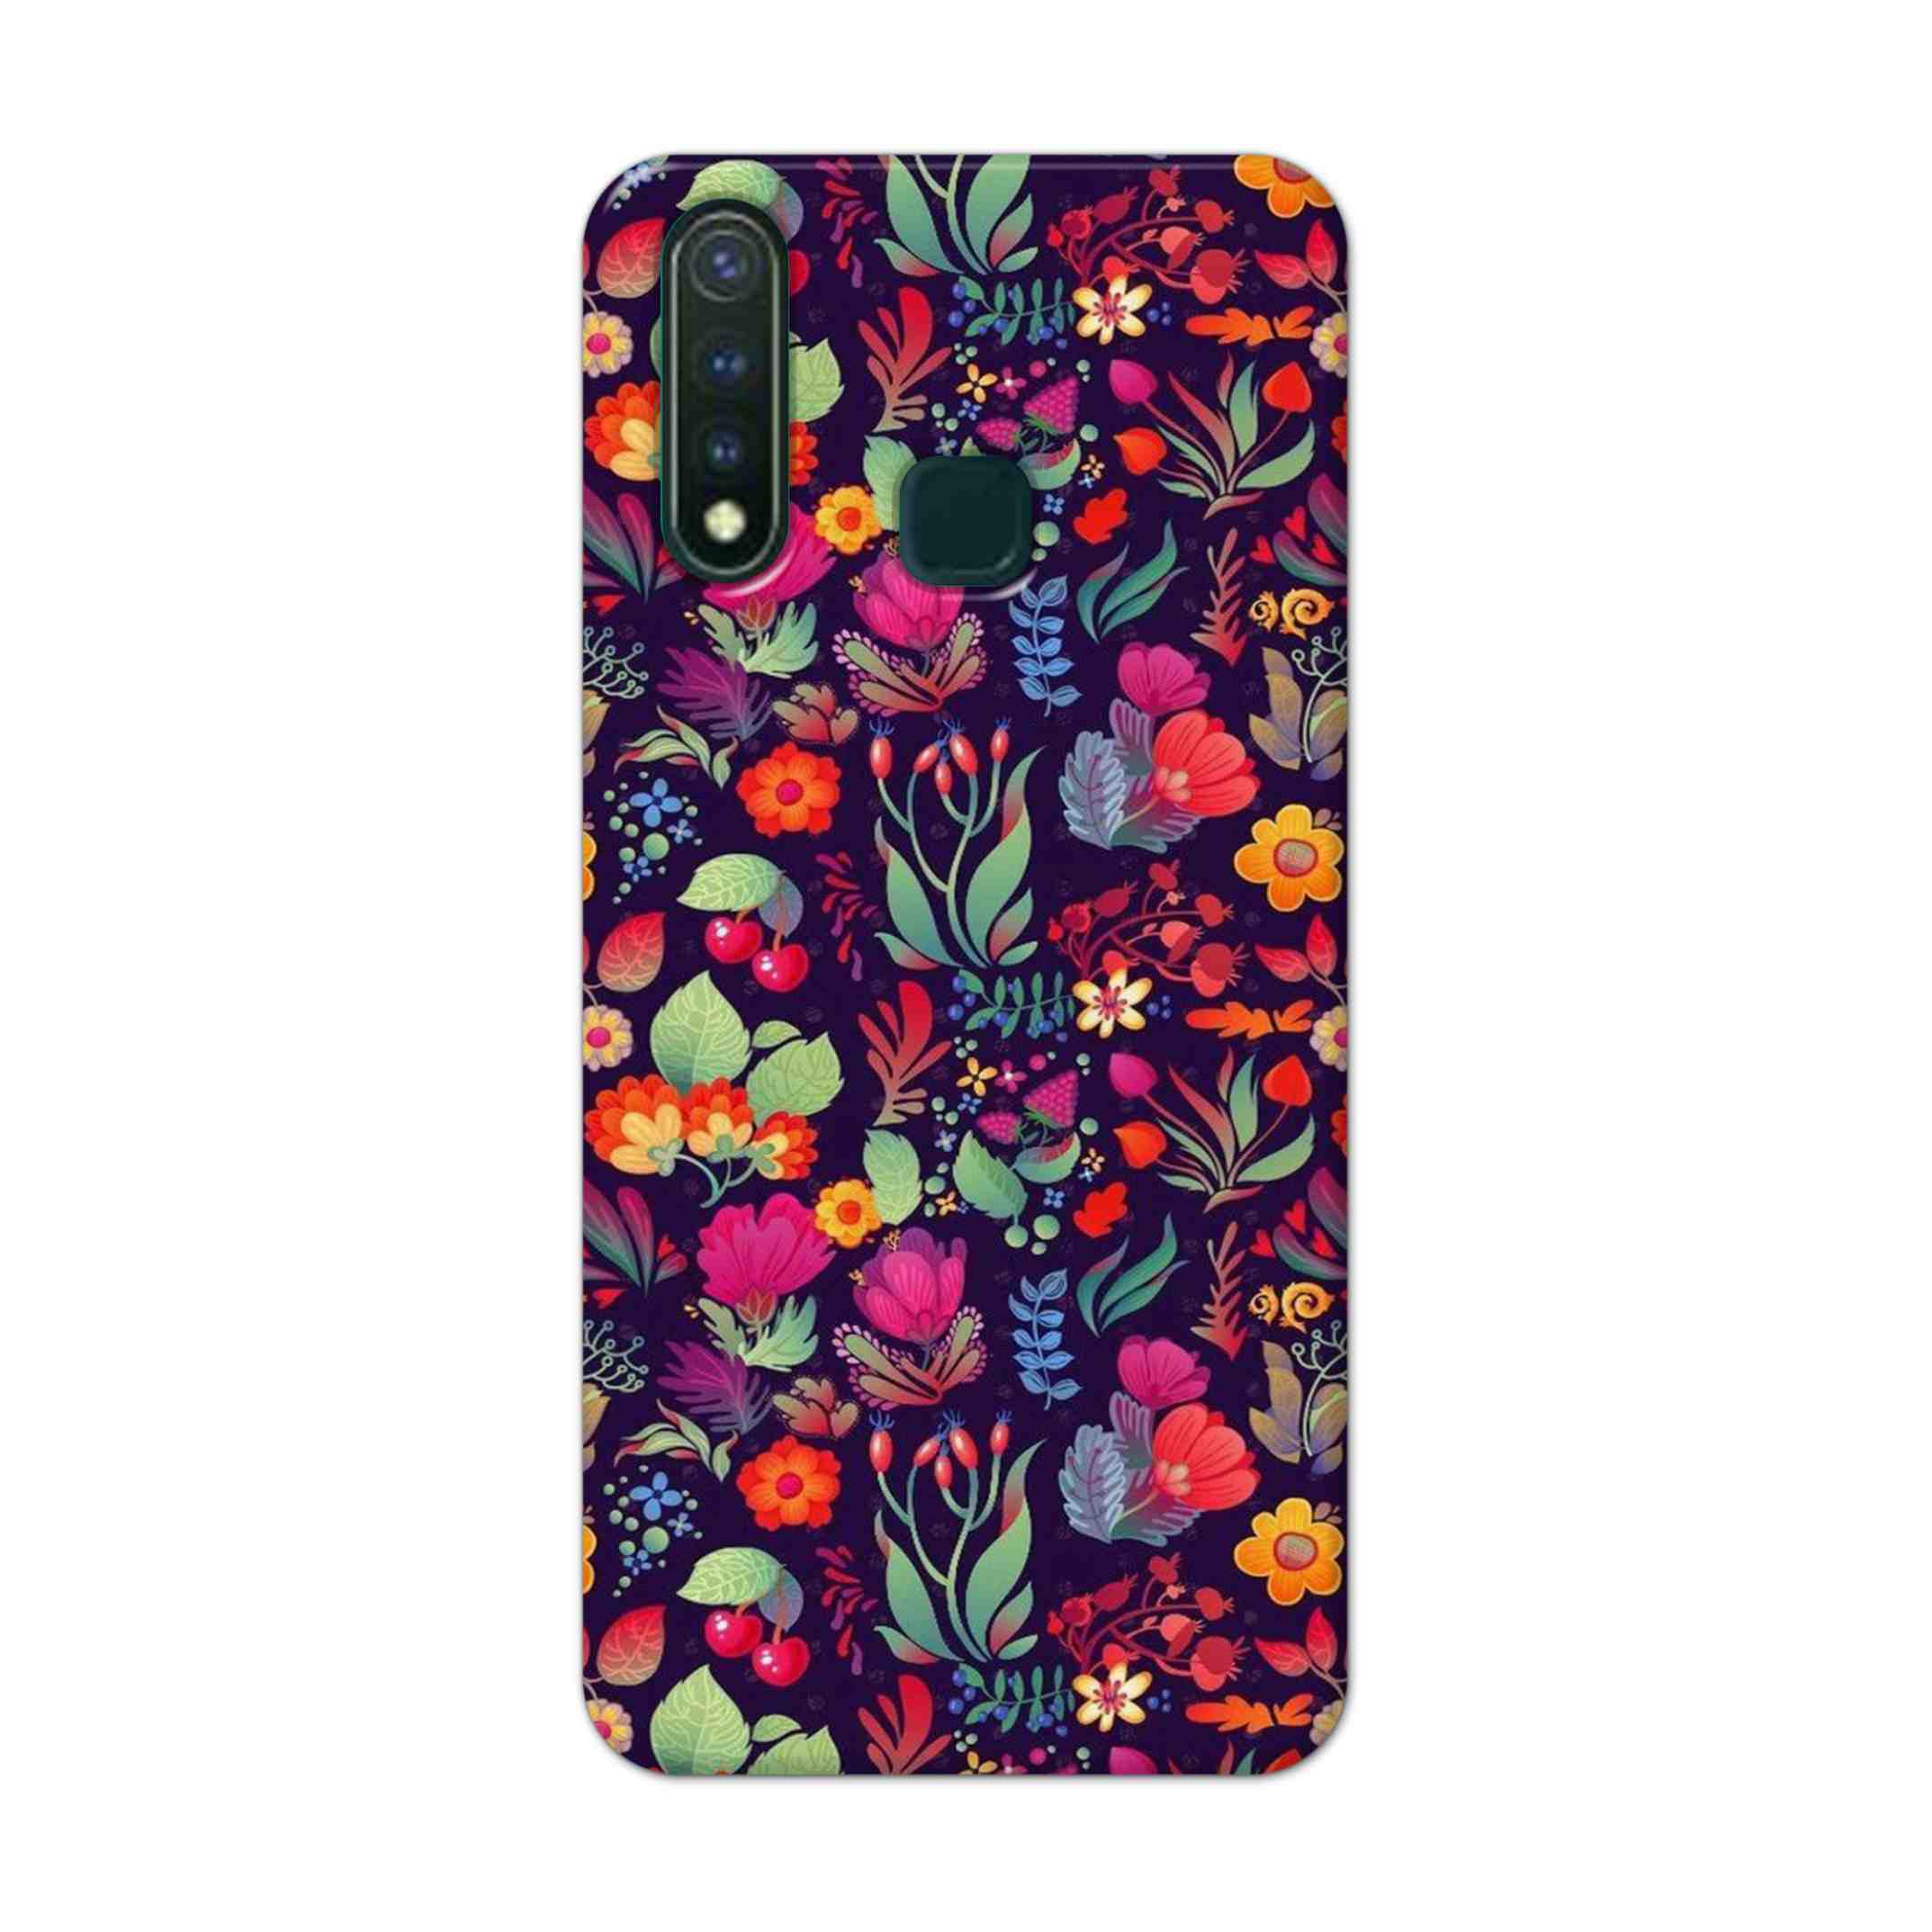 Buy Fruits Flower Hard Back Mobile Phone Case Cover For Vivo U20 Online